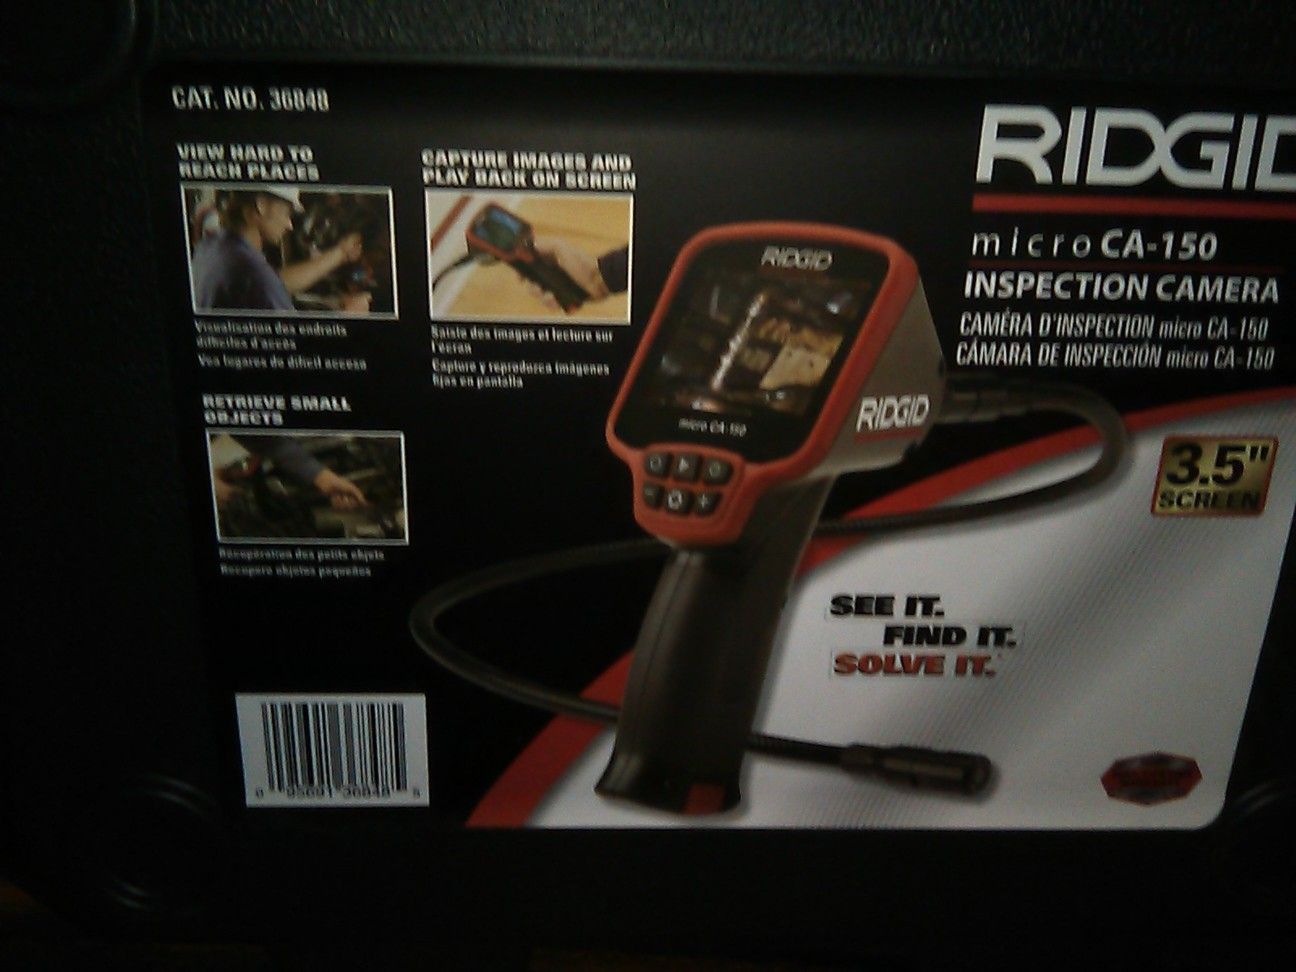 Ridgid Micro CA-150 Inspection Camera